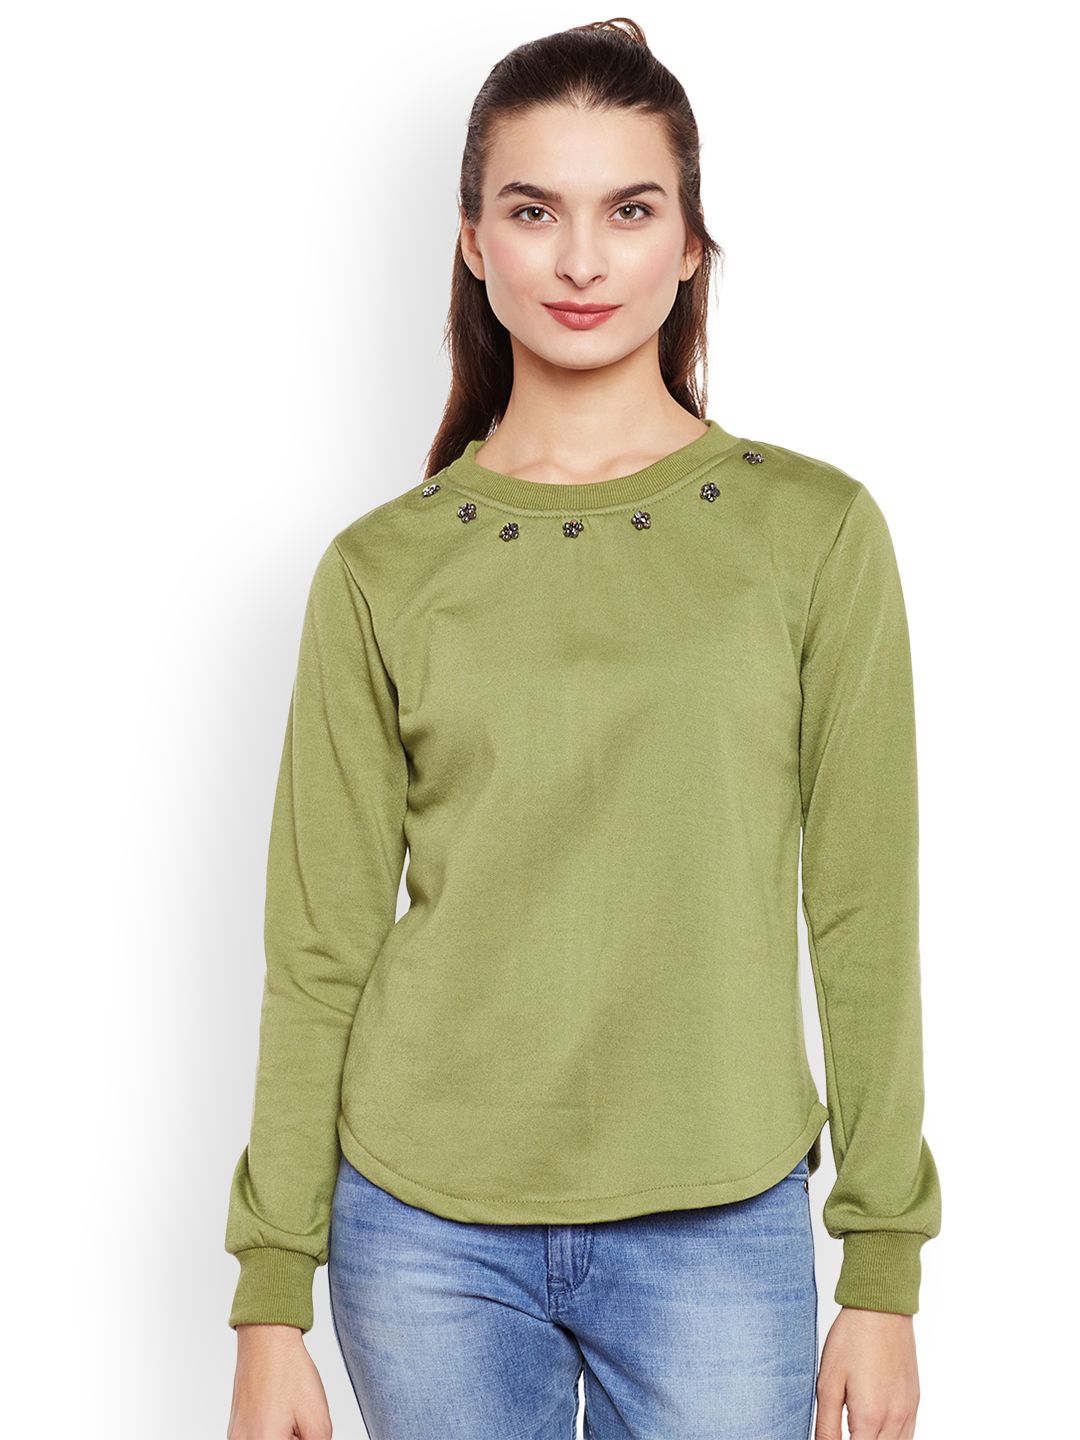 Belle Fille Women Olive Green Solid Sweatshirt Price in India